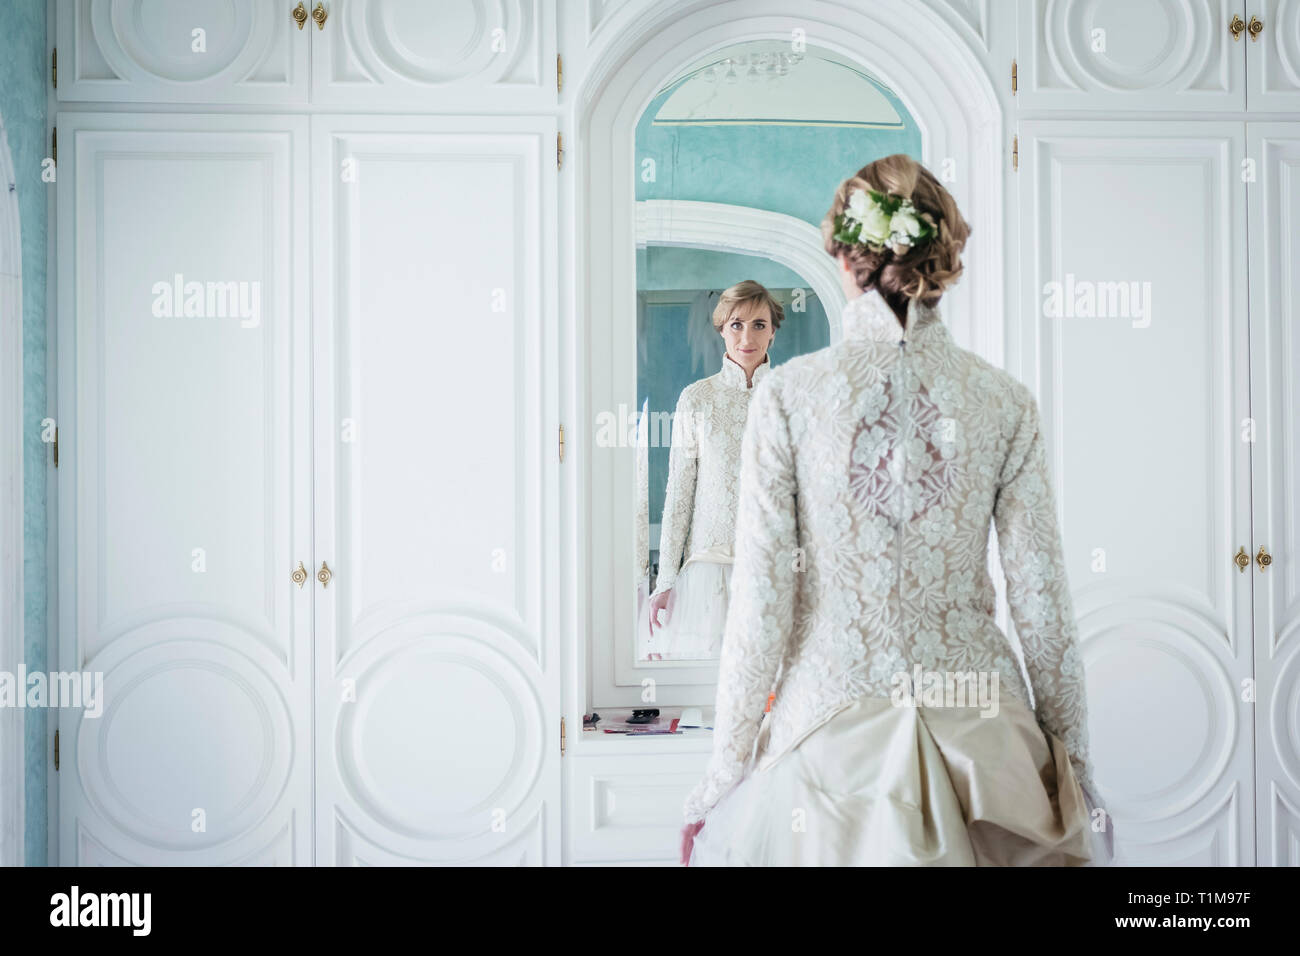 Elegant bride in lace wedding dress at mirror Stock Photo